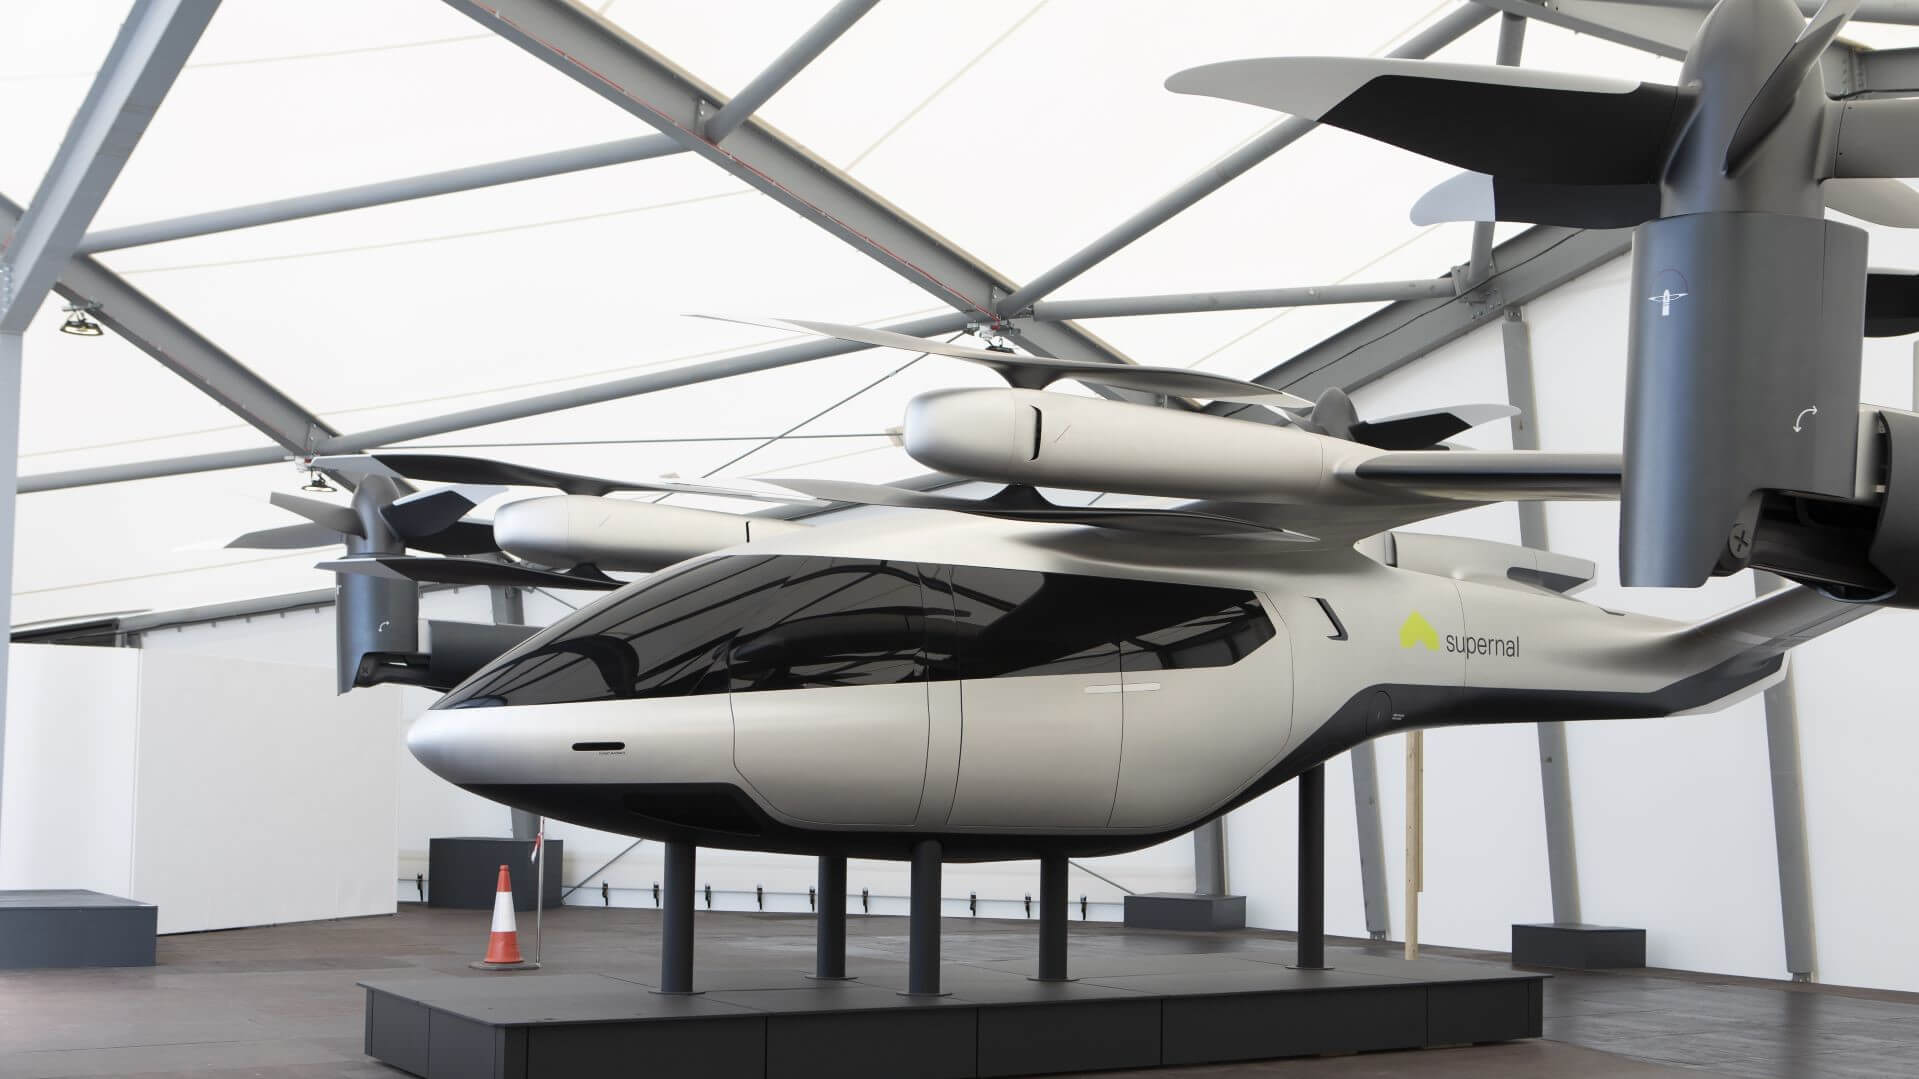 Life size model of SA1 Supernal Air Taxi concept